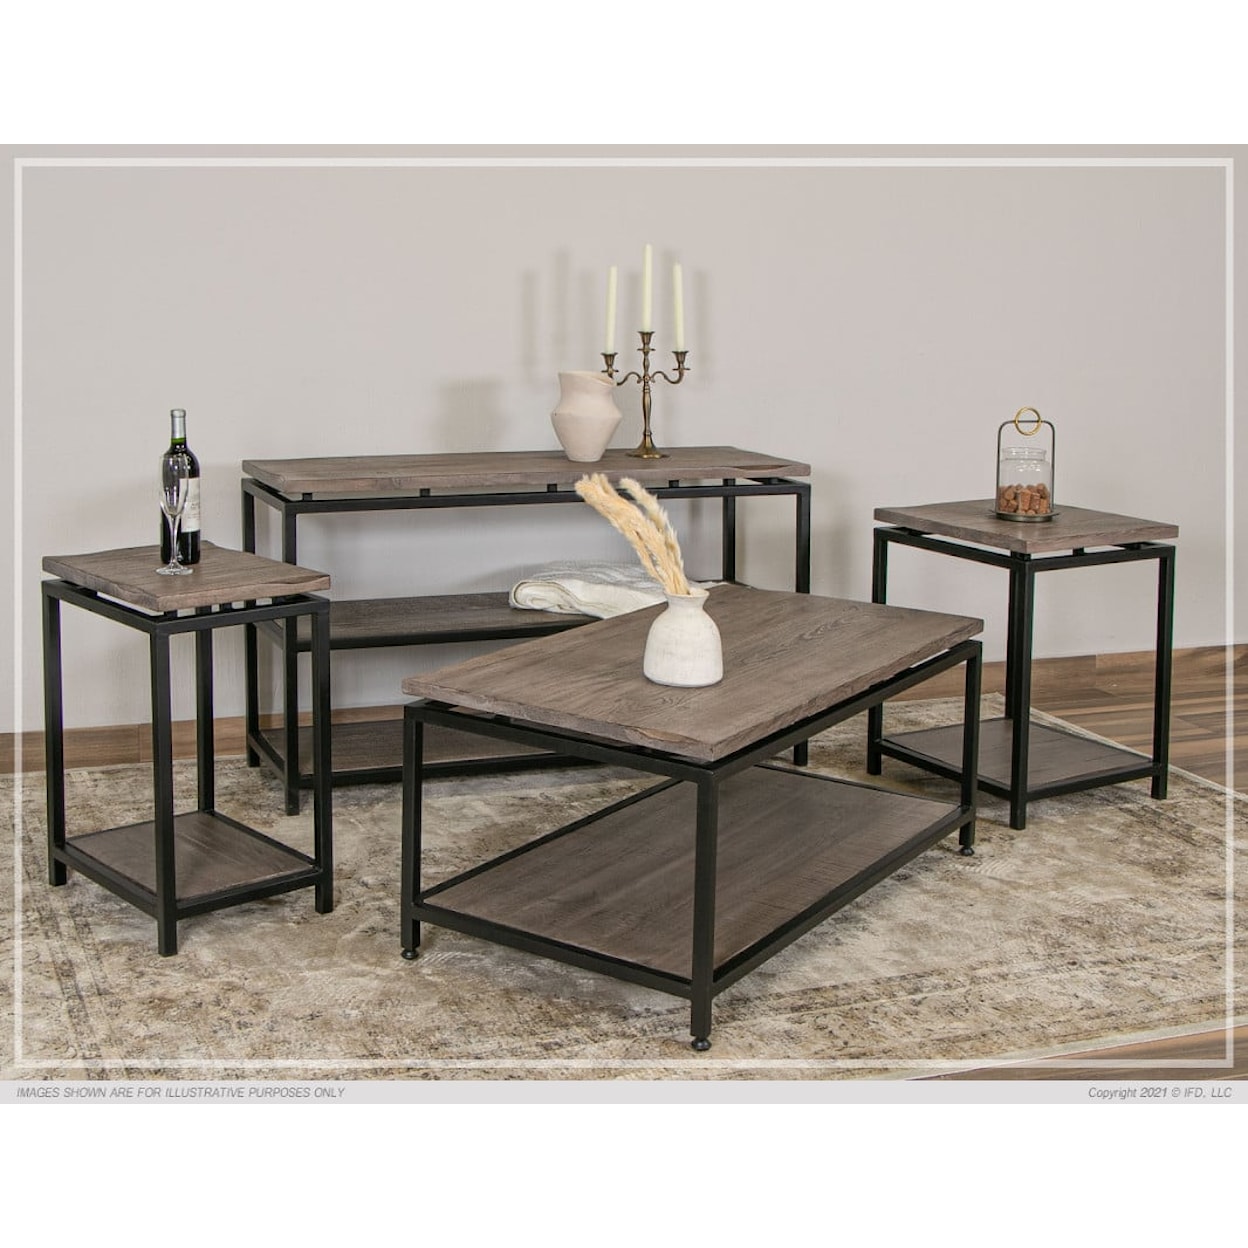 International Furniture Direct Blacksmith Sofa Table with Shelving